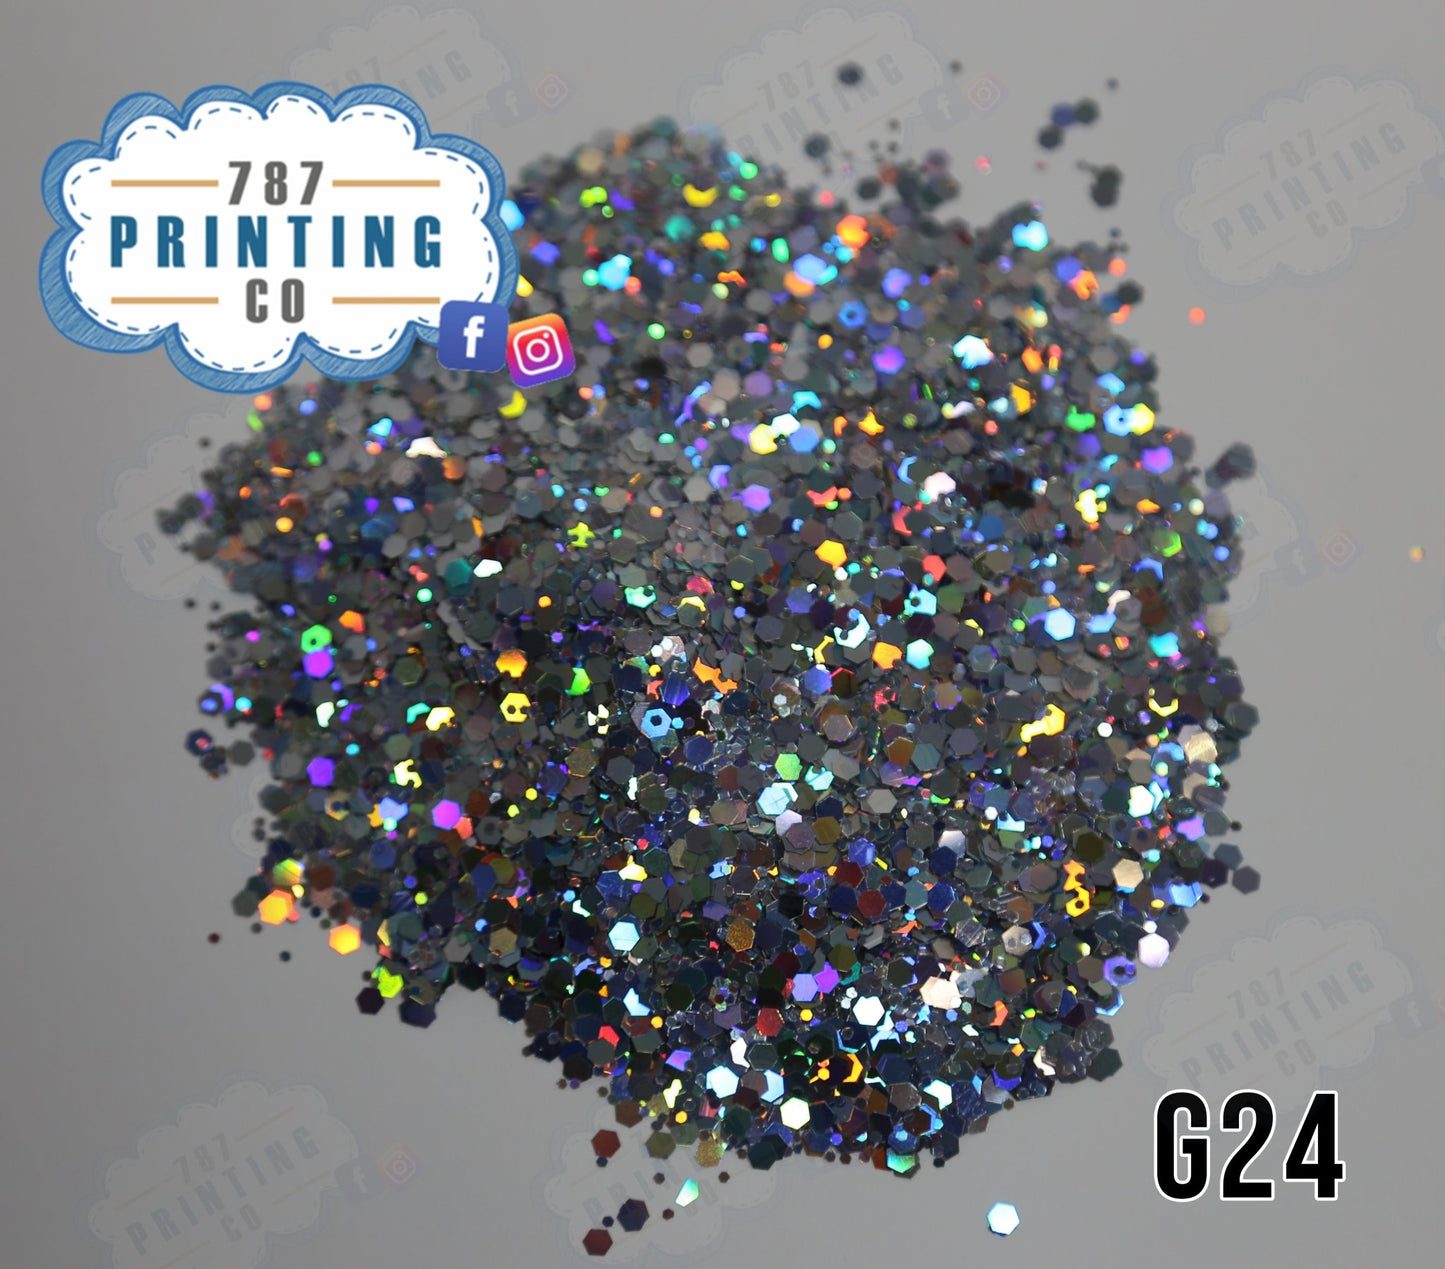 Rio La Plata Mixed Chunky Glitter (G24) - 787 Printing Co.